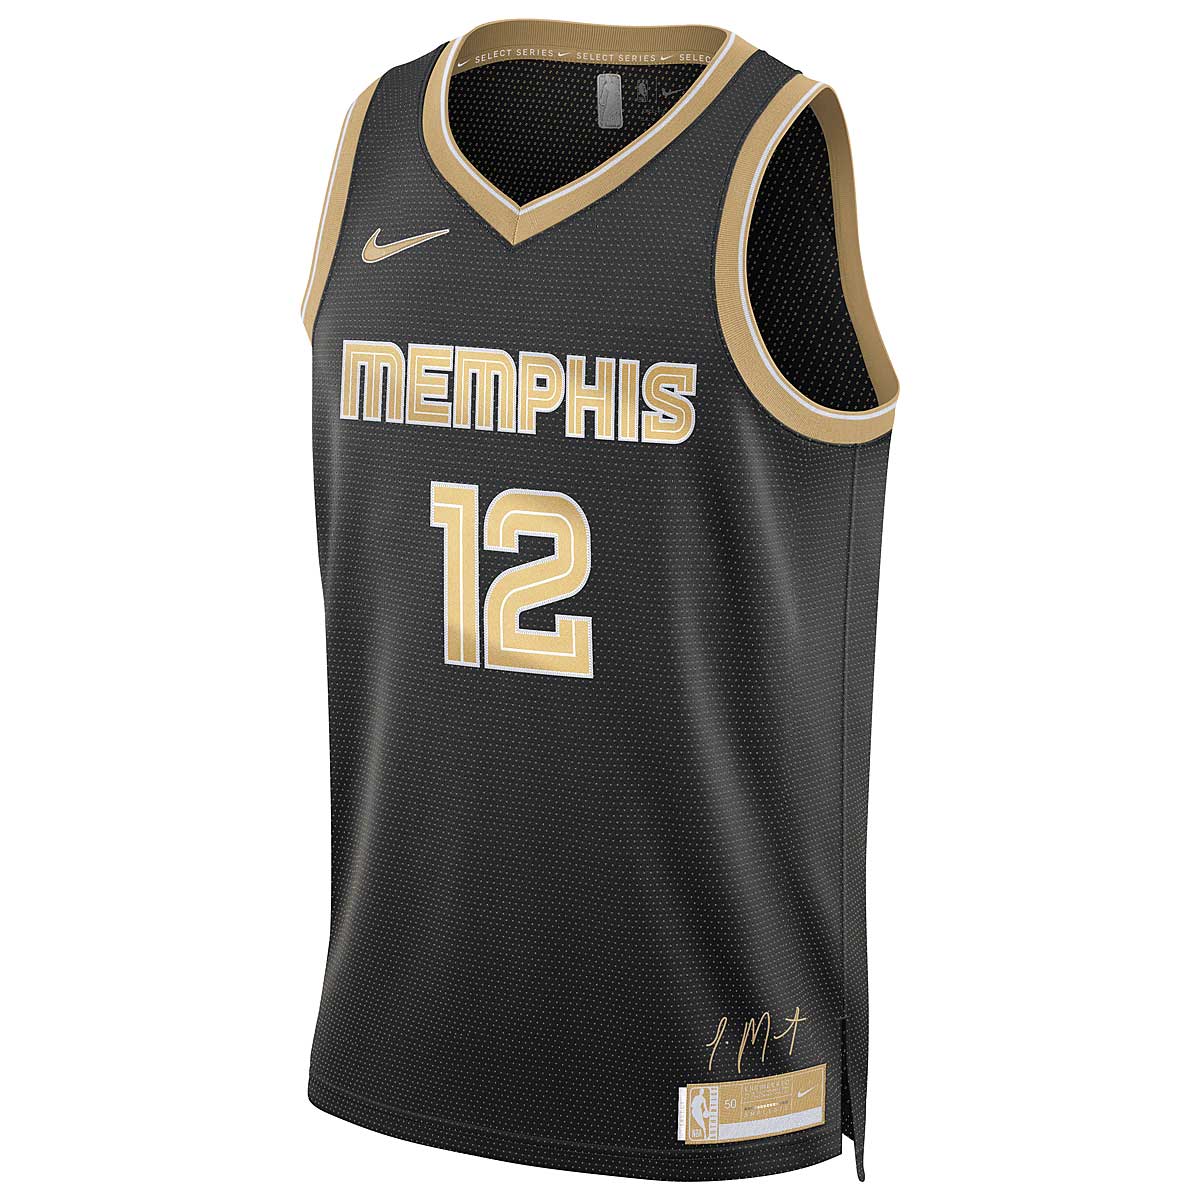 Image of Nike NBA Memphis Grizzlies Dri-fit Select Series Swingman Jersey Ja Morant, Black/club Gold